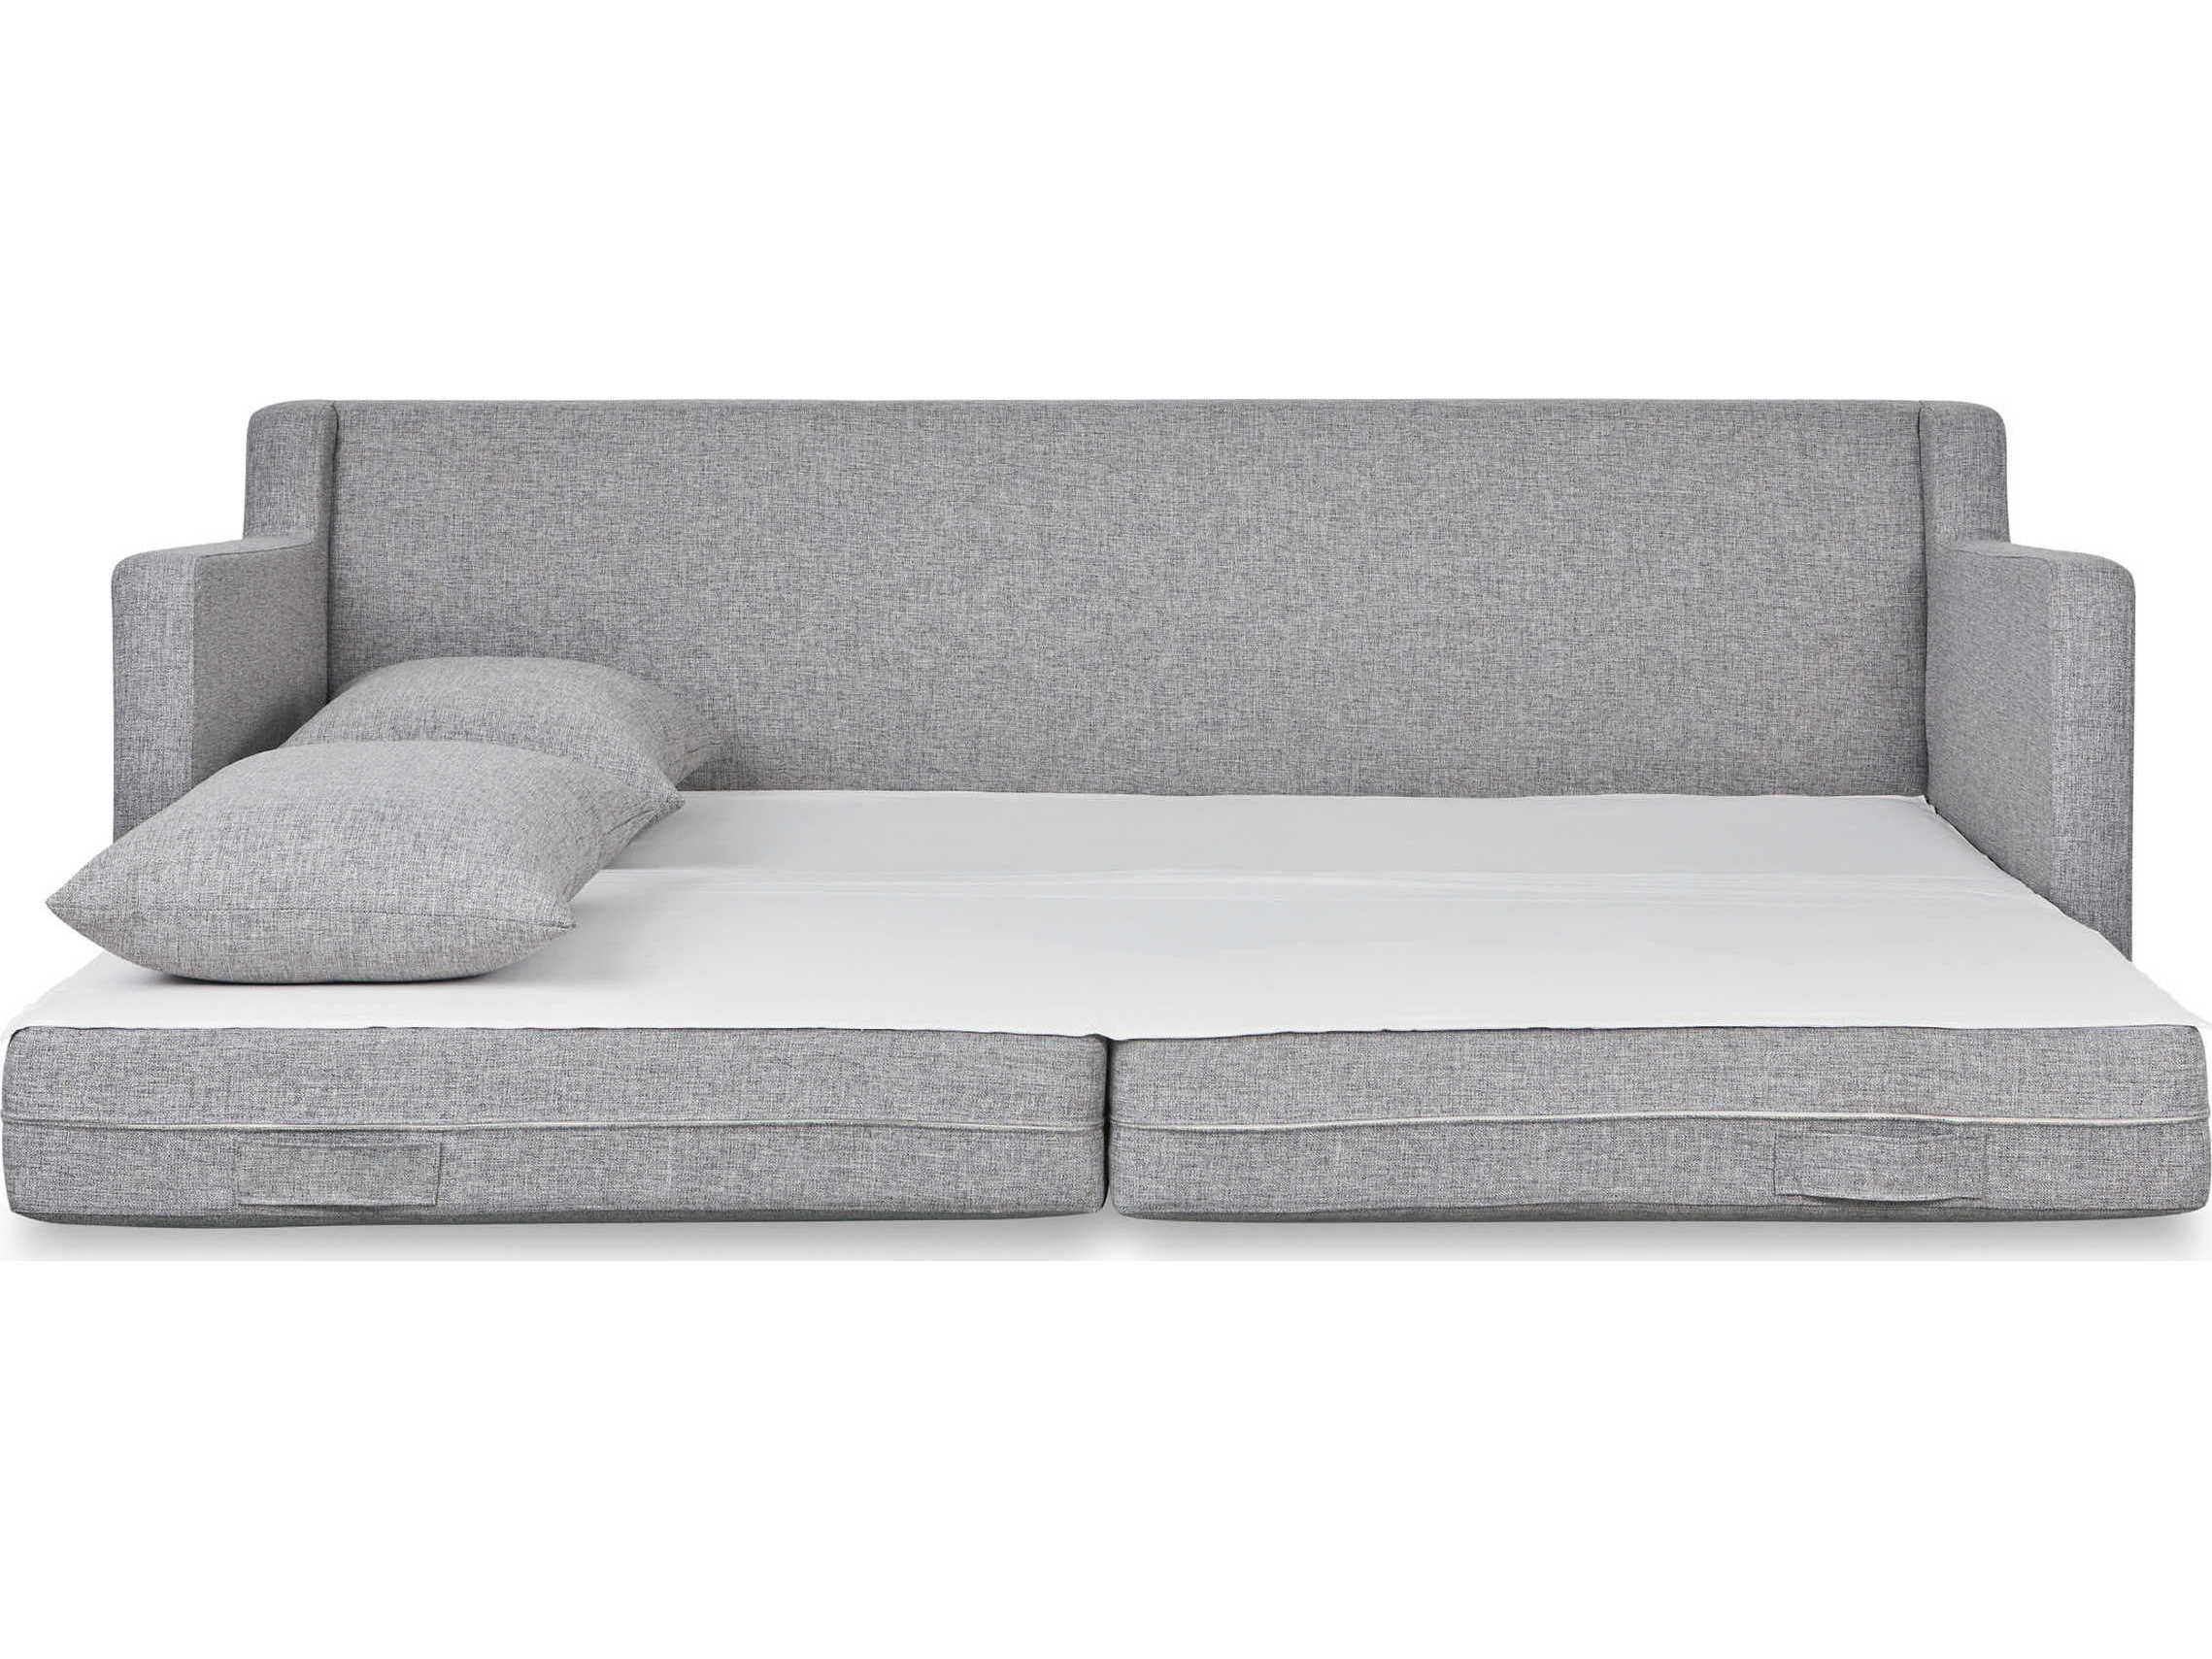 gus flip sofa bed price